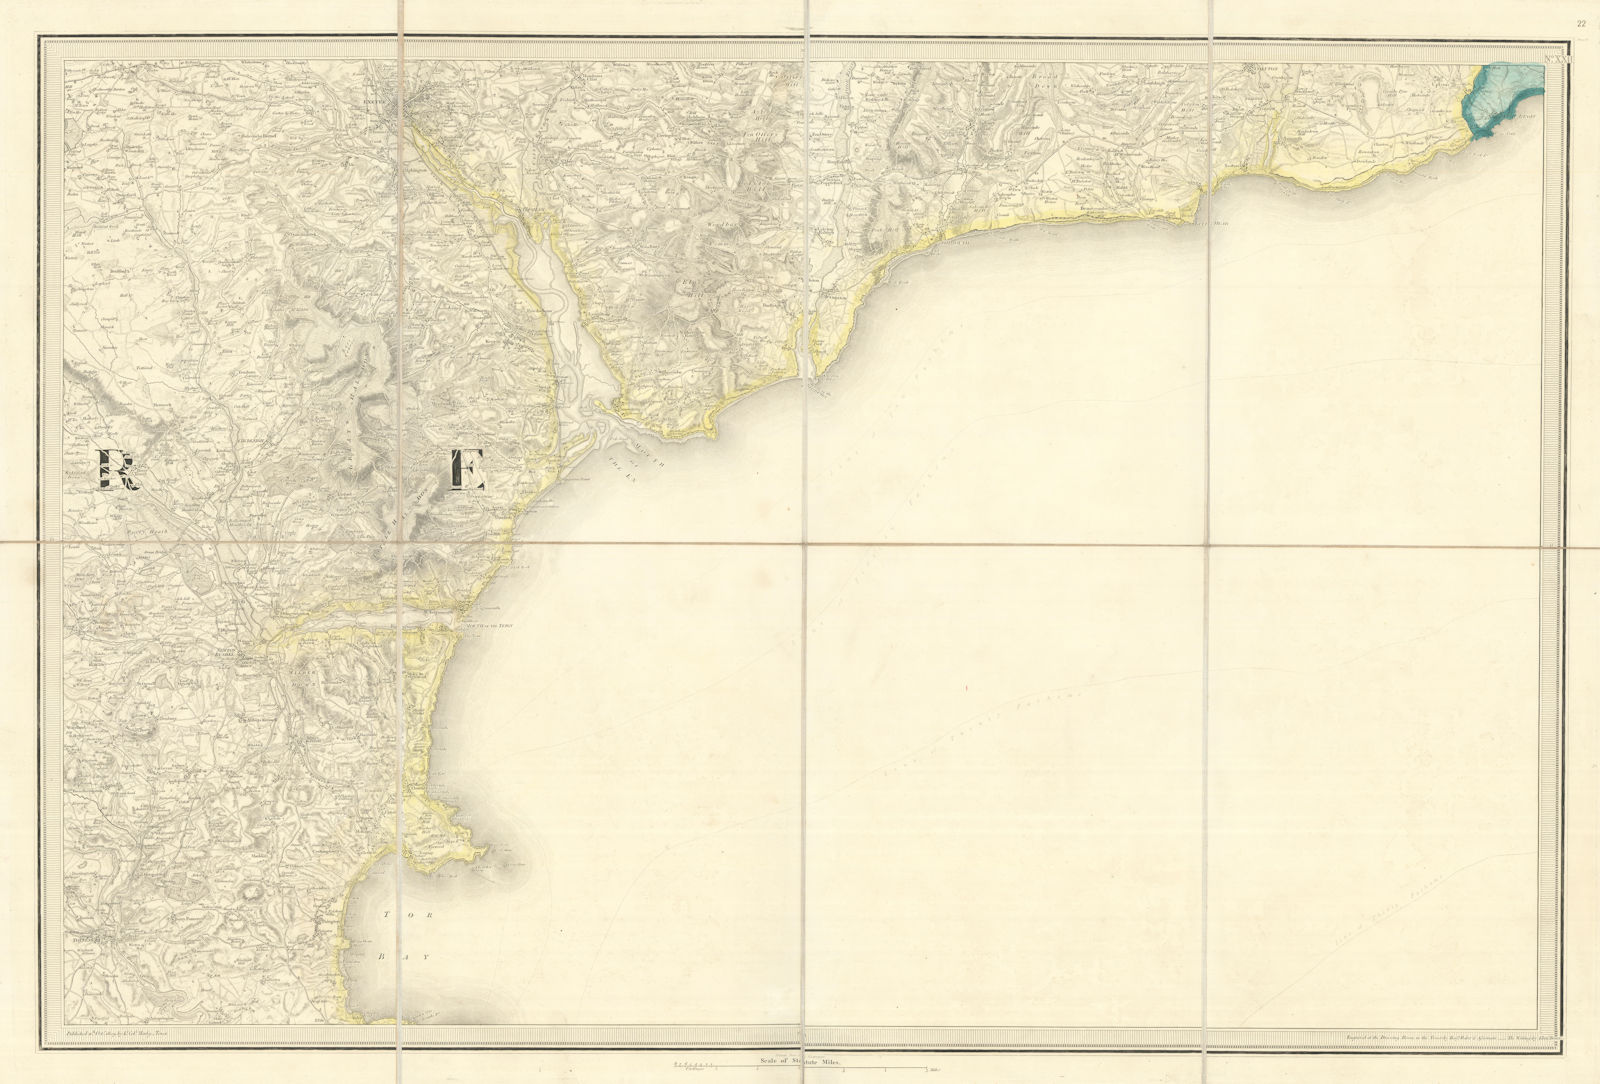 OS #22 South Devon Coast & English Riviera. Exeter Torquay Sidmouth 1809 map